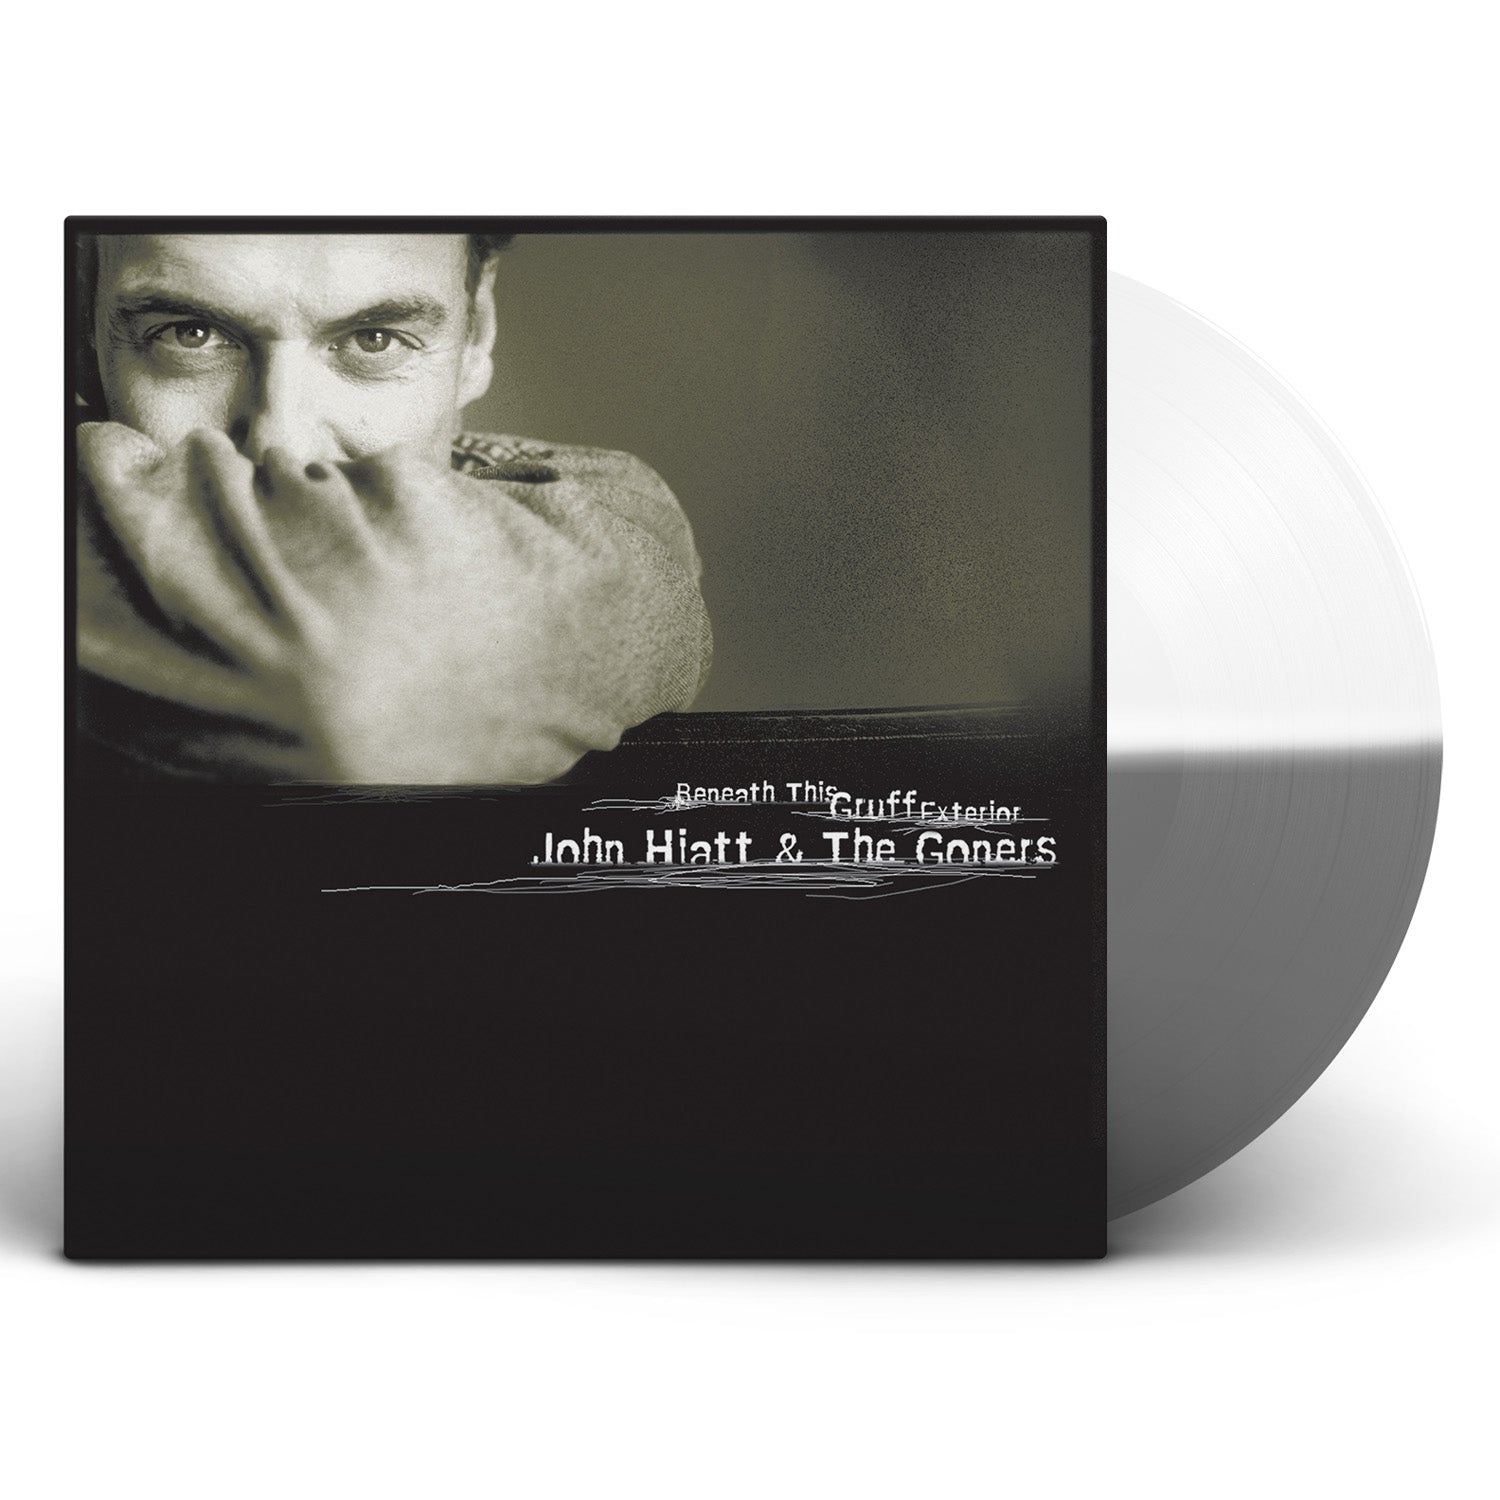 John Hiatt - Beneath This Gruff Exterior [Limited Edition Color Vinyl]